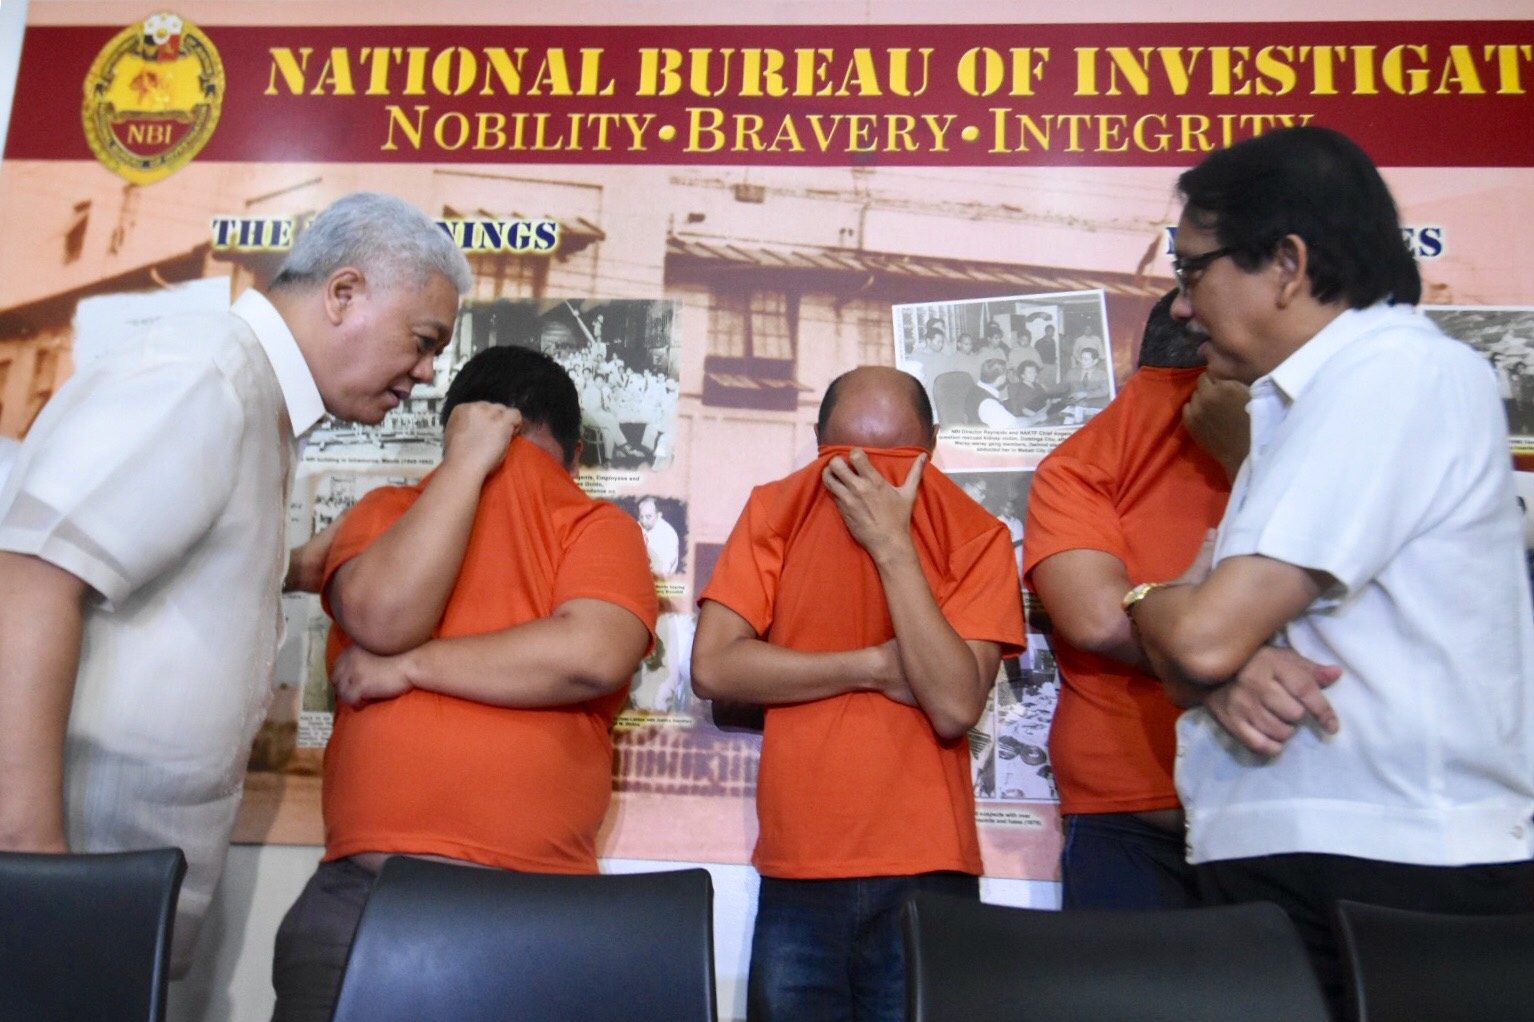 NBI nabs 3 BIR special investigators for bribery